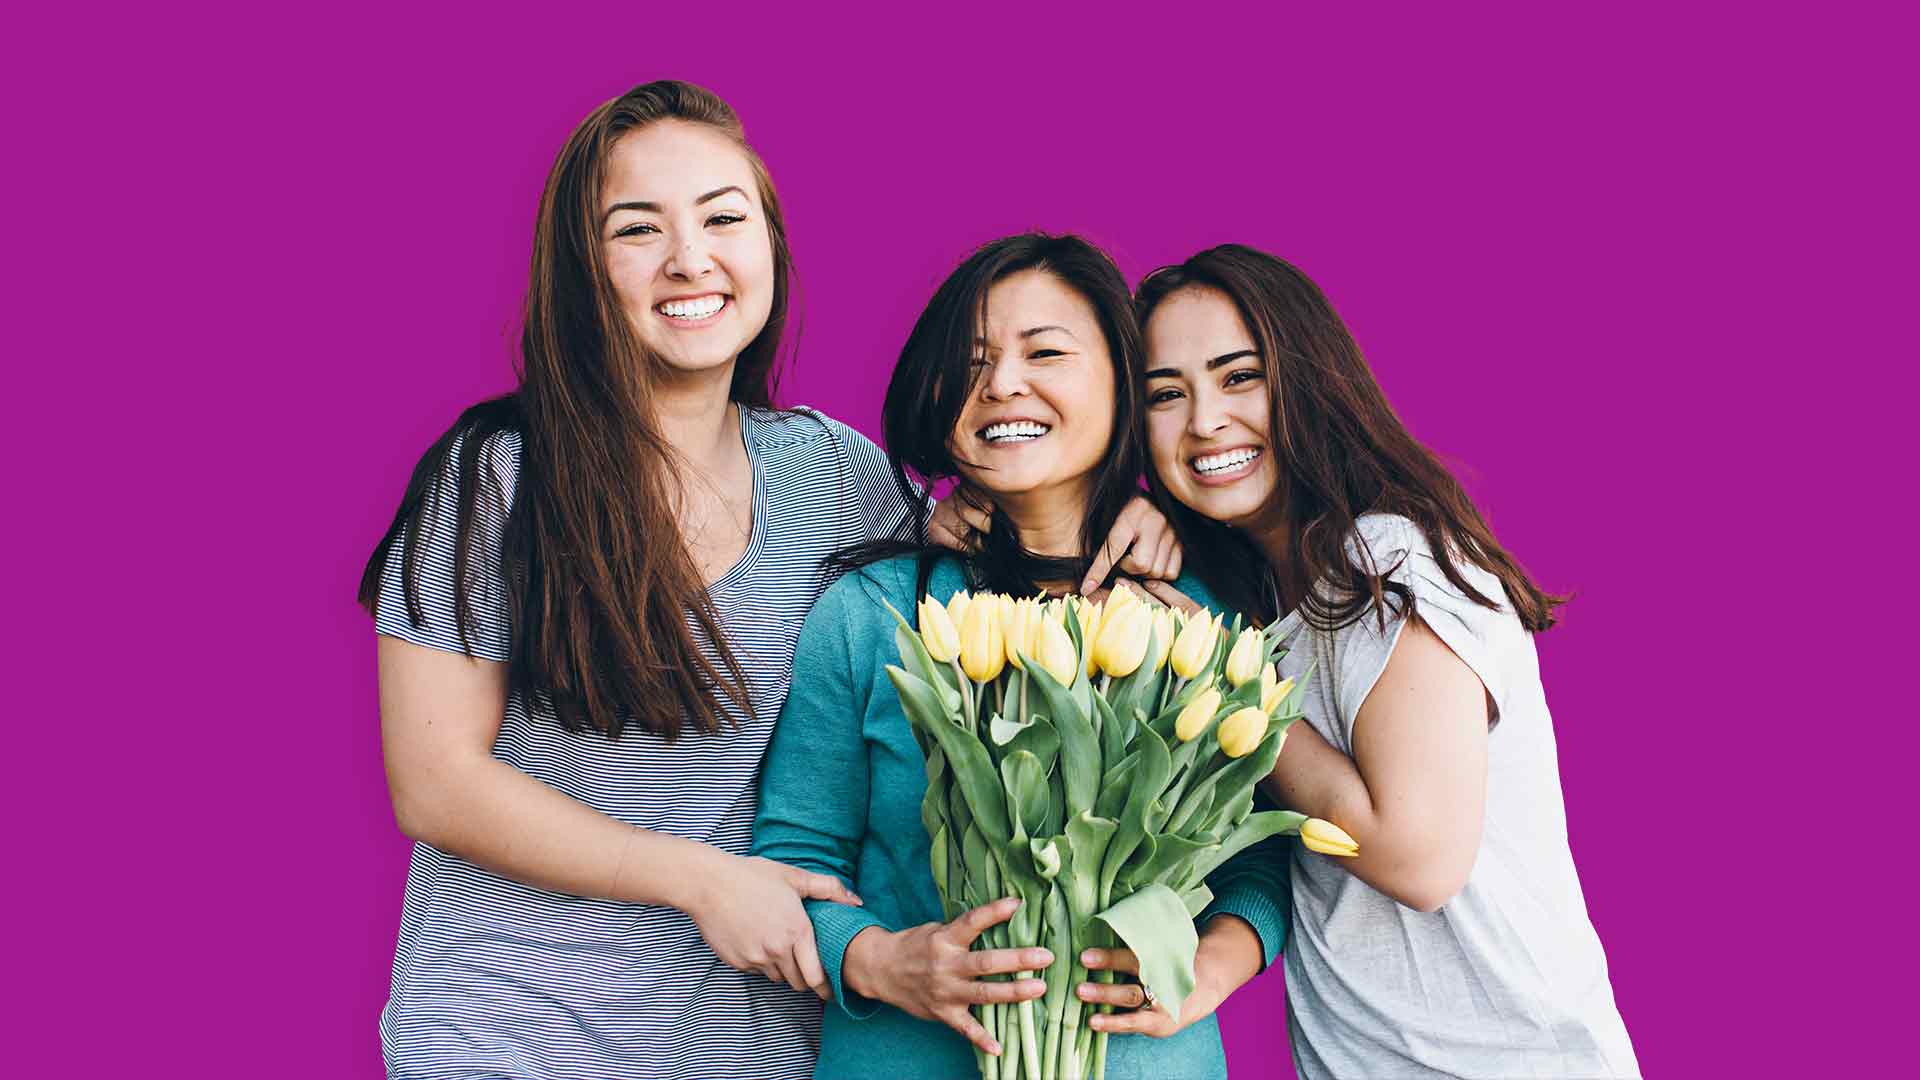 Maman qui tient des tulipes jaunes avec ses deux filles qui l'étreignent